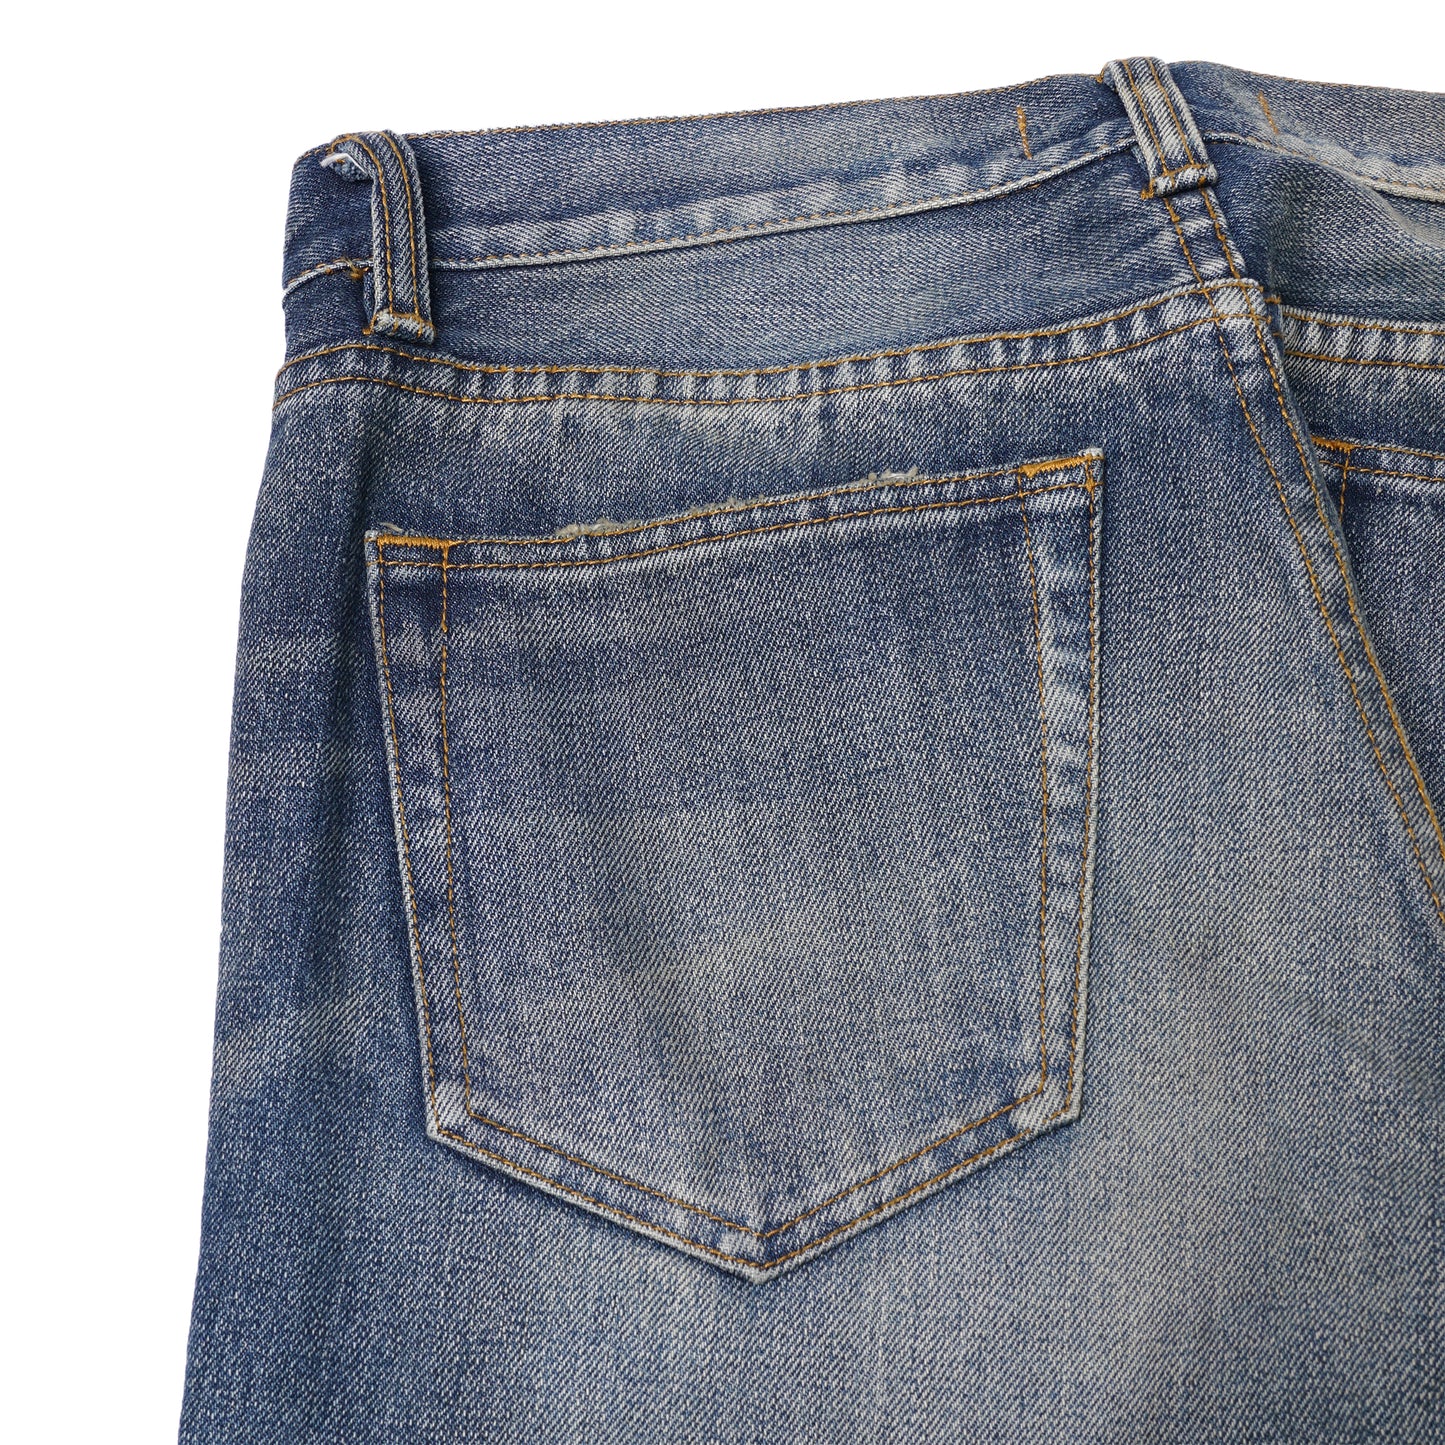 【Custom】R84 Vintage Washed 14oz. Slim Cut Jeans